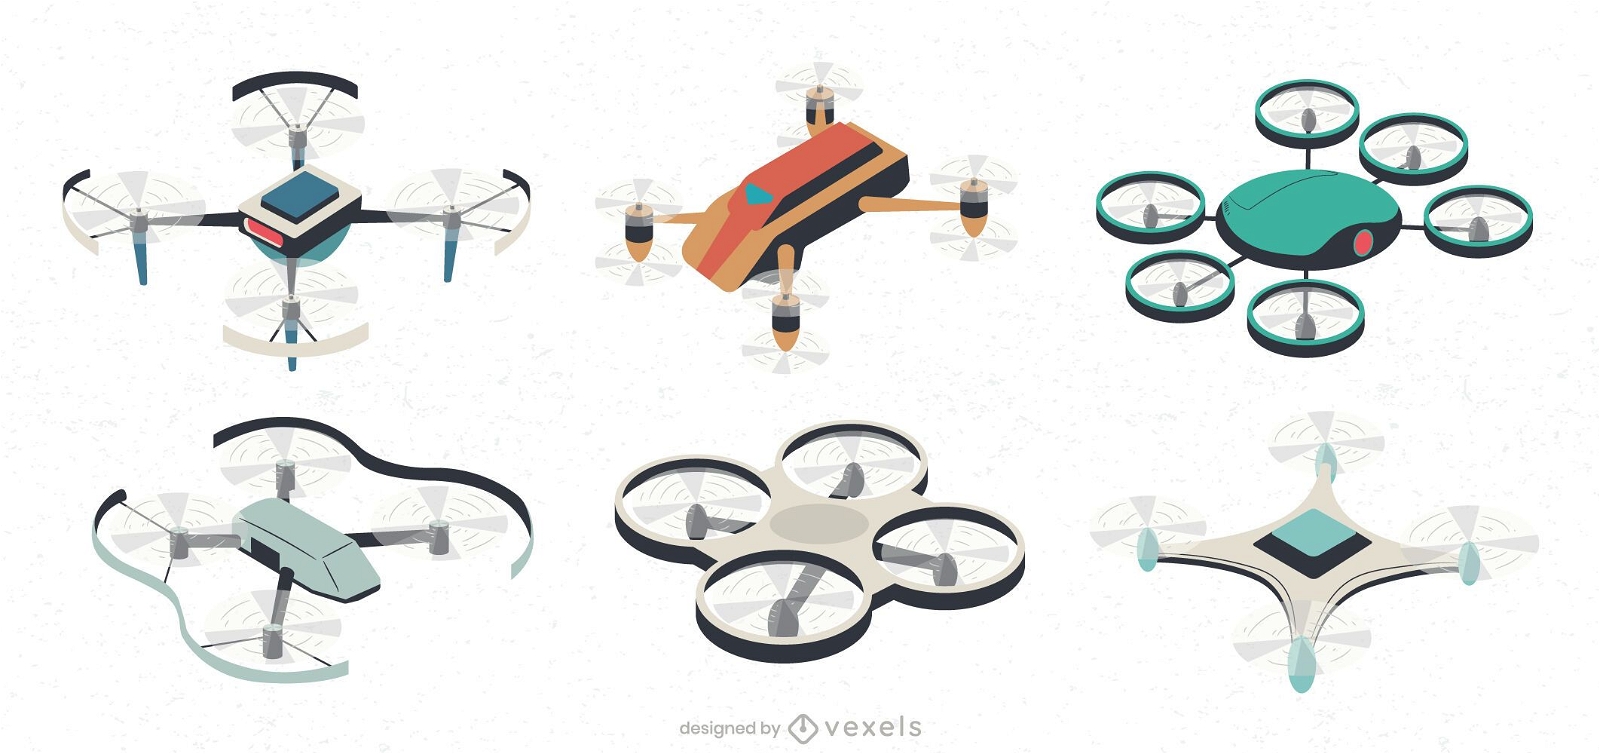 UAV drone illustration set